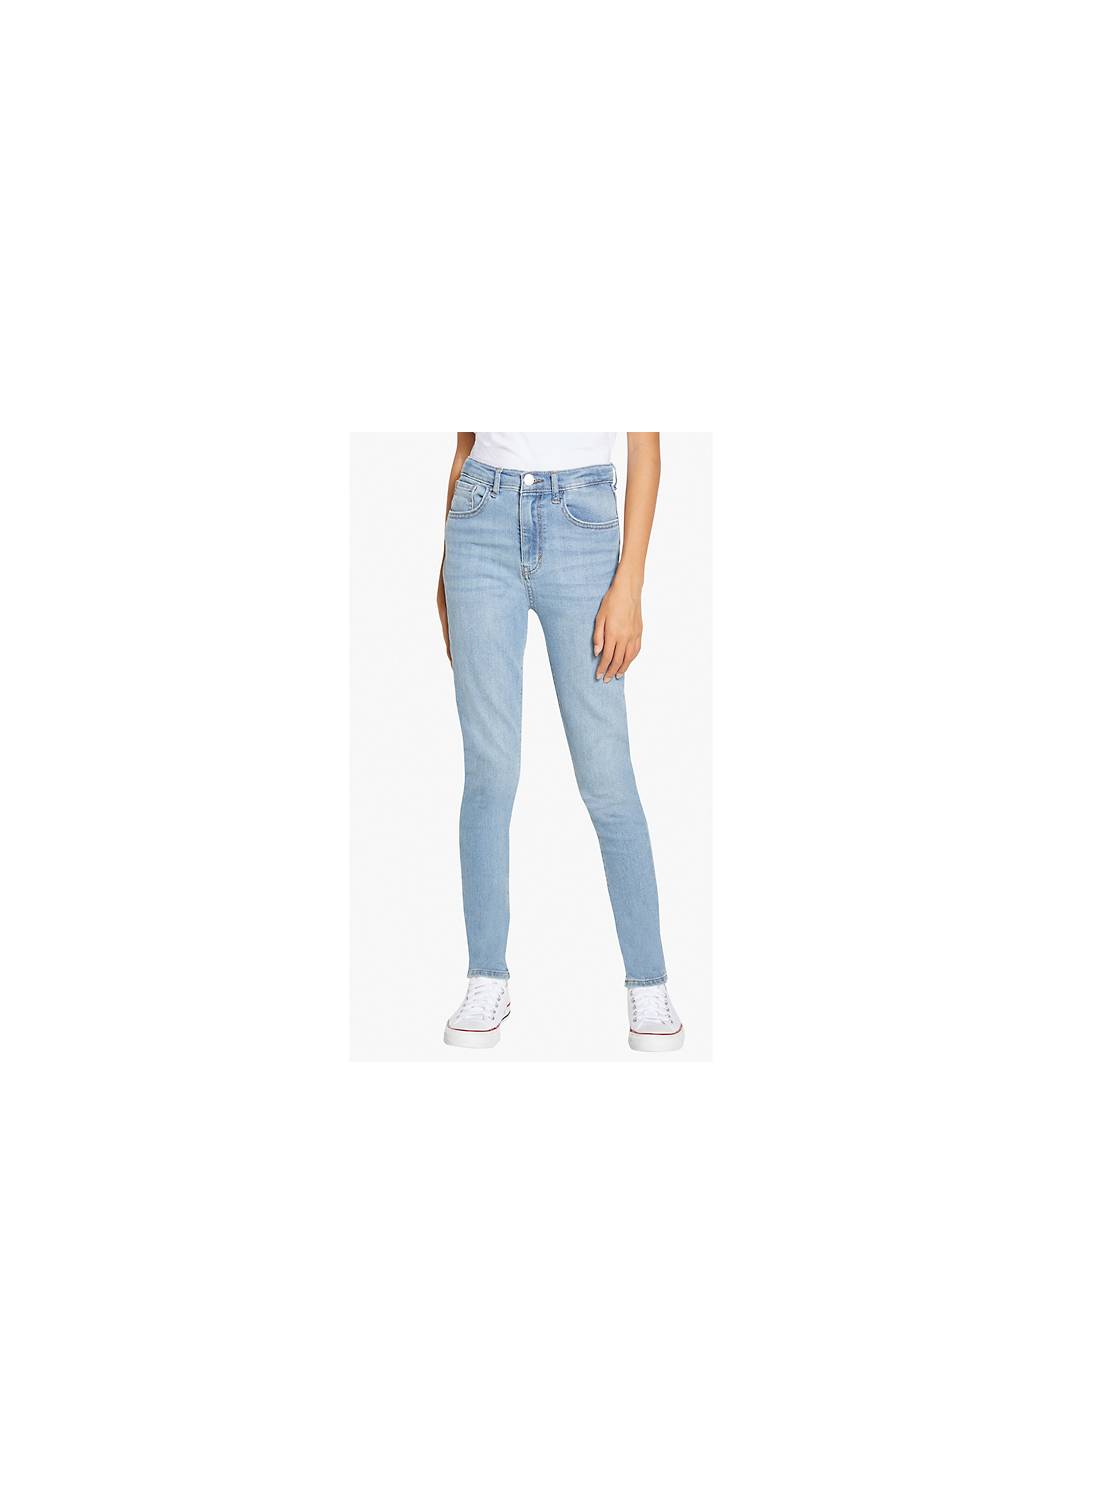 Cute Teen Girl Denim Jeans for Teen Girls Juniors Mid Rise Slim Fit  Stretchy Skinny Jeans Size 11/12 Dark Rinse